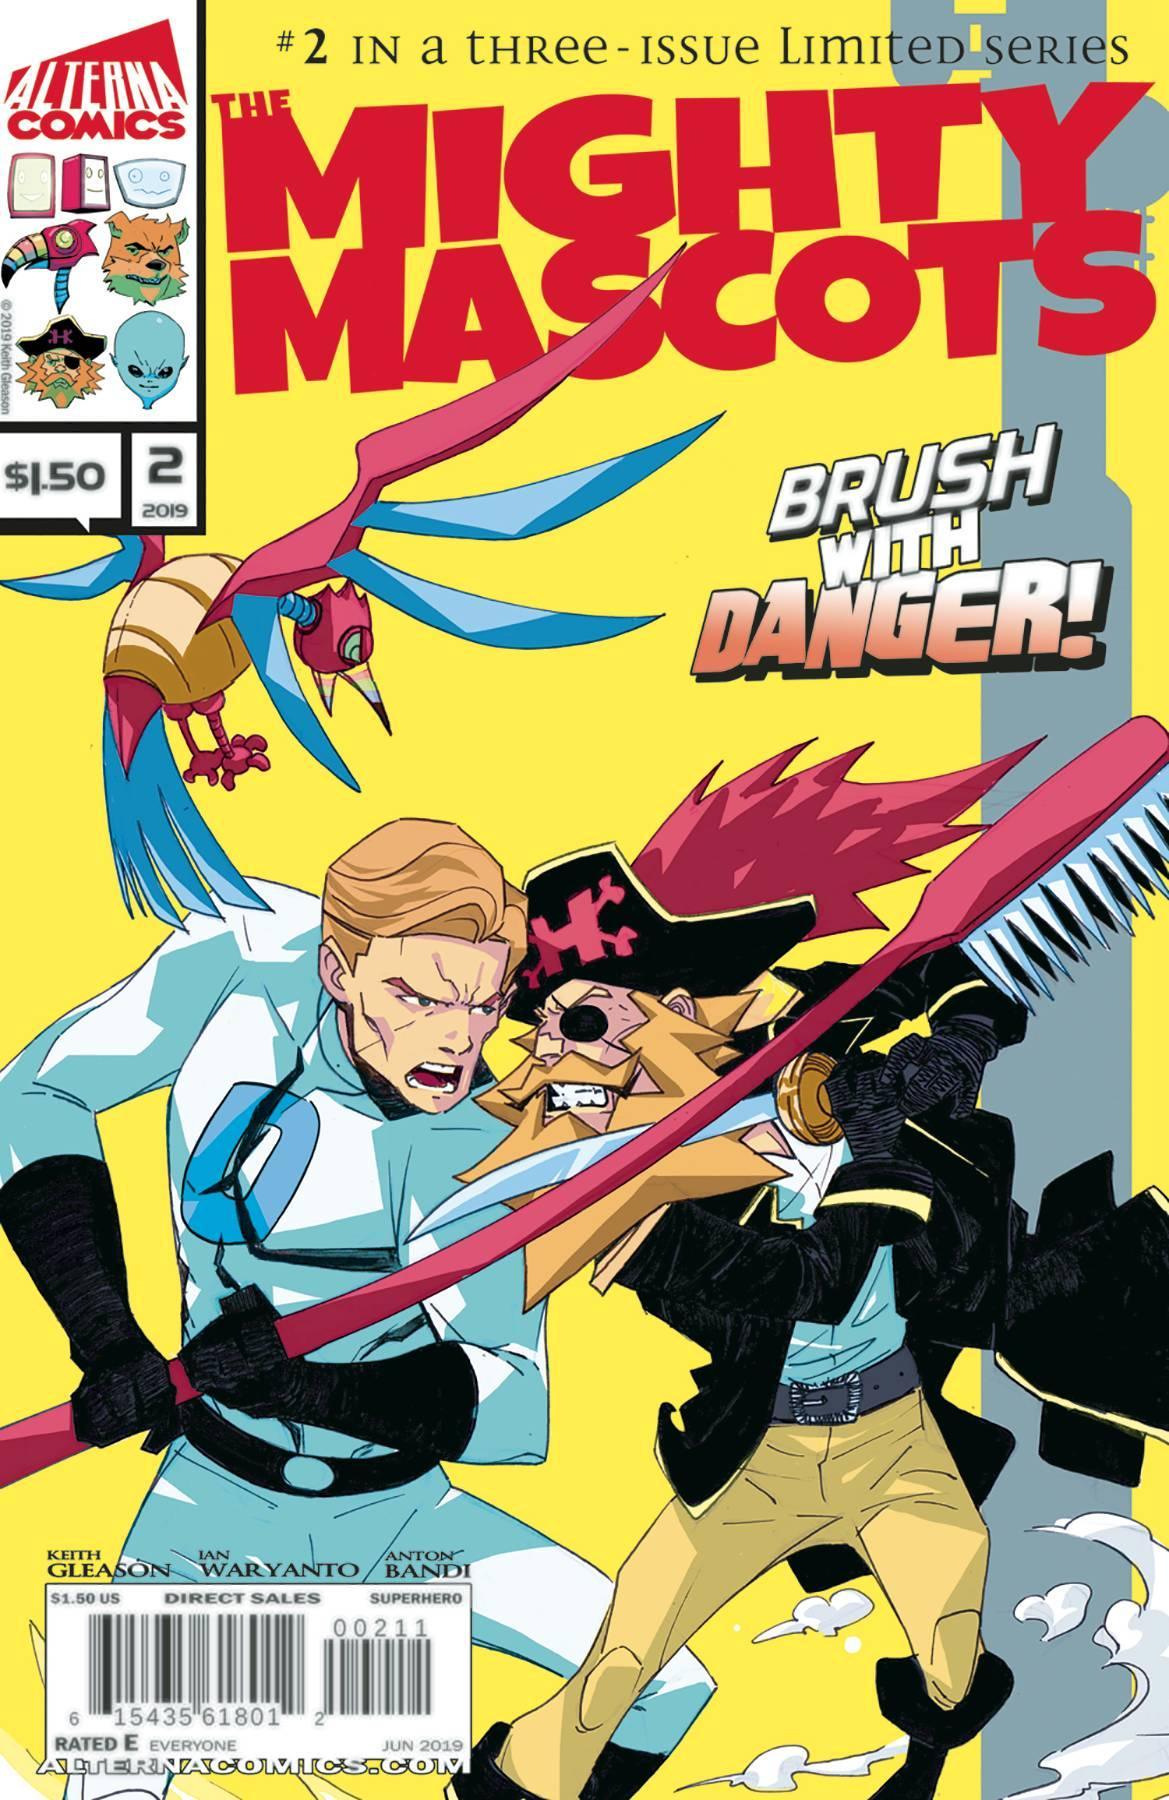 MIGHTY MASCOTS #2 - Kings Comics